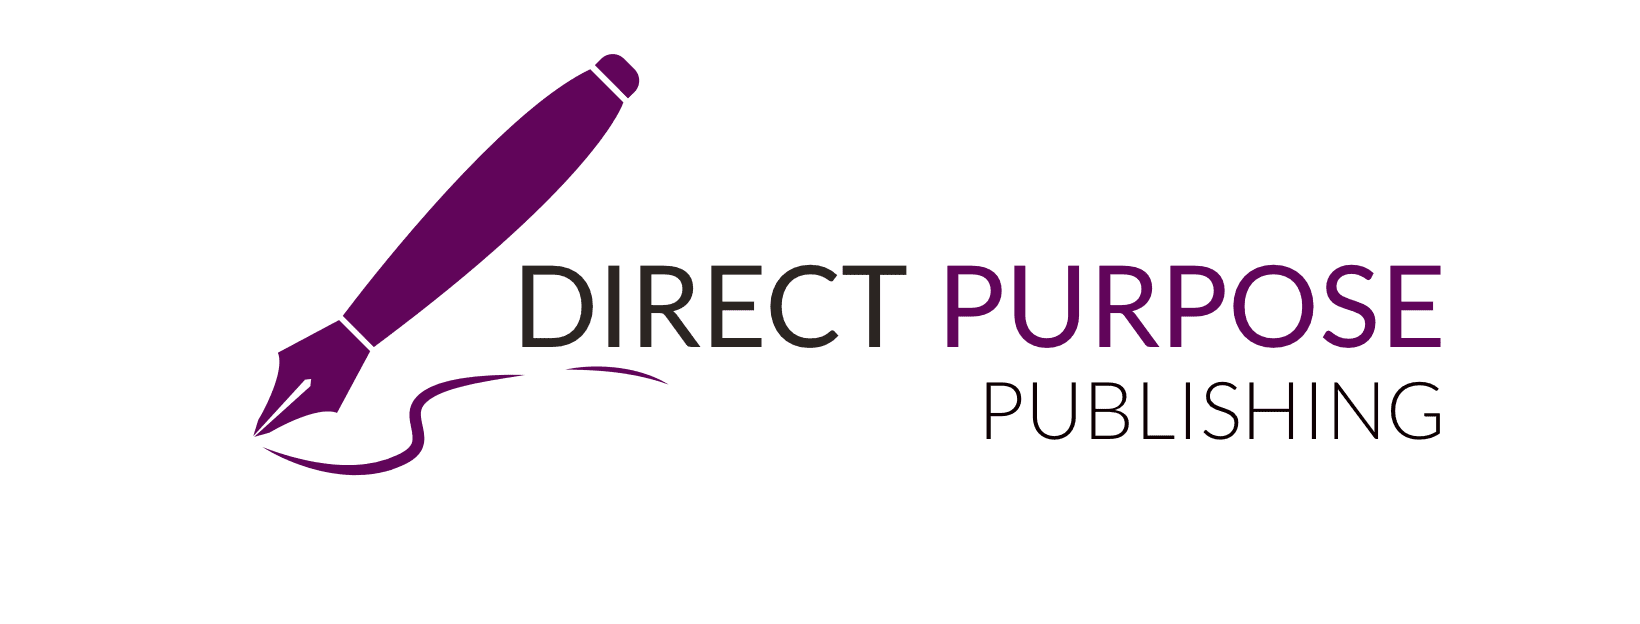 Direct Purpose Publishing